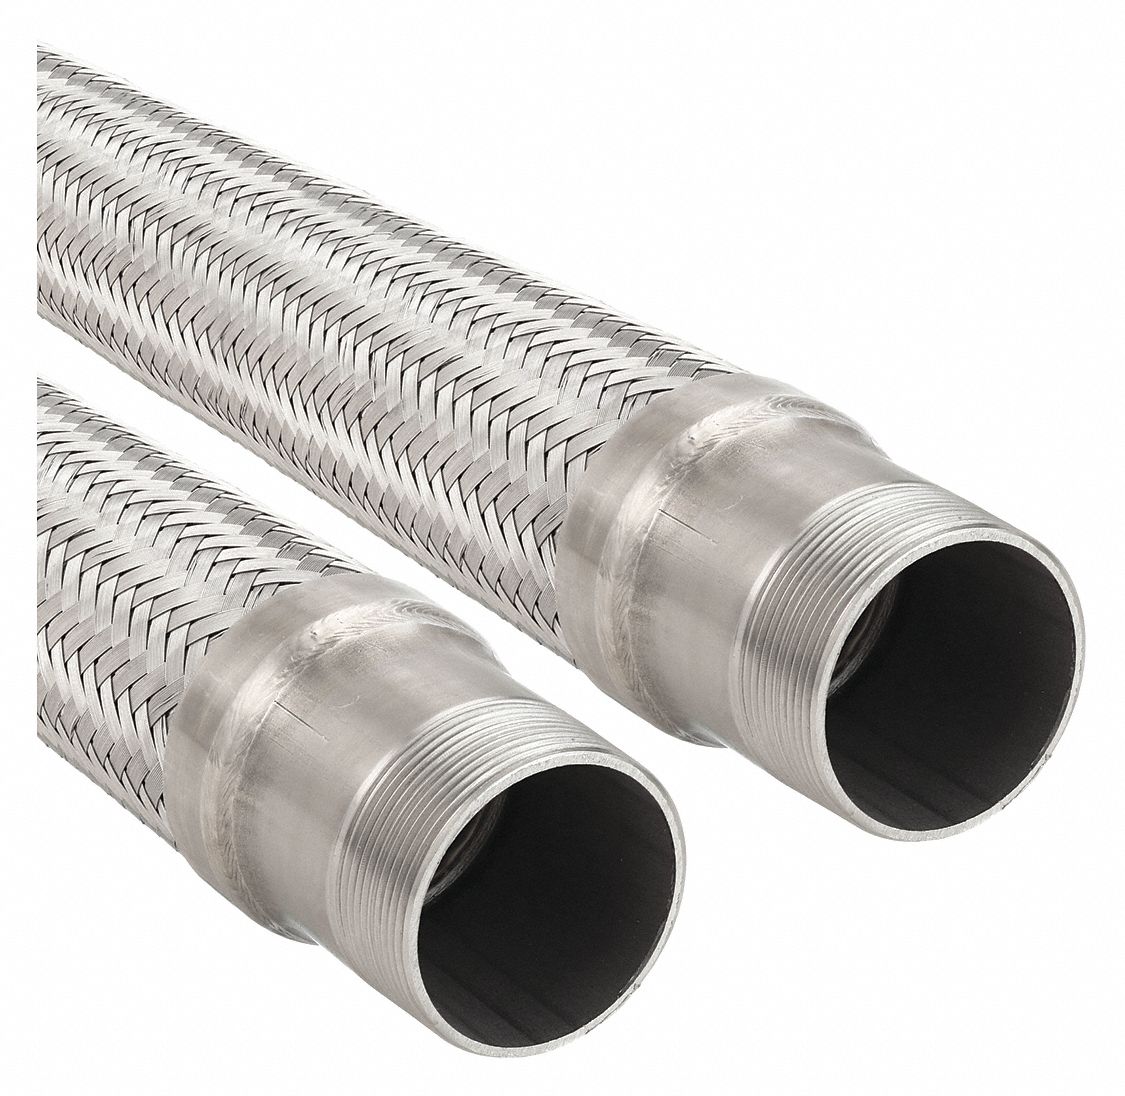 3/4 x 18 Stainless Steel Compressed Air Line Metal Flex Hose